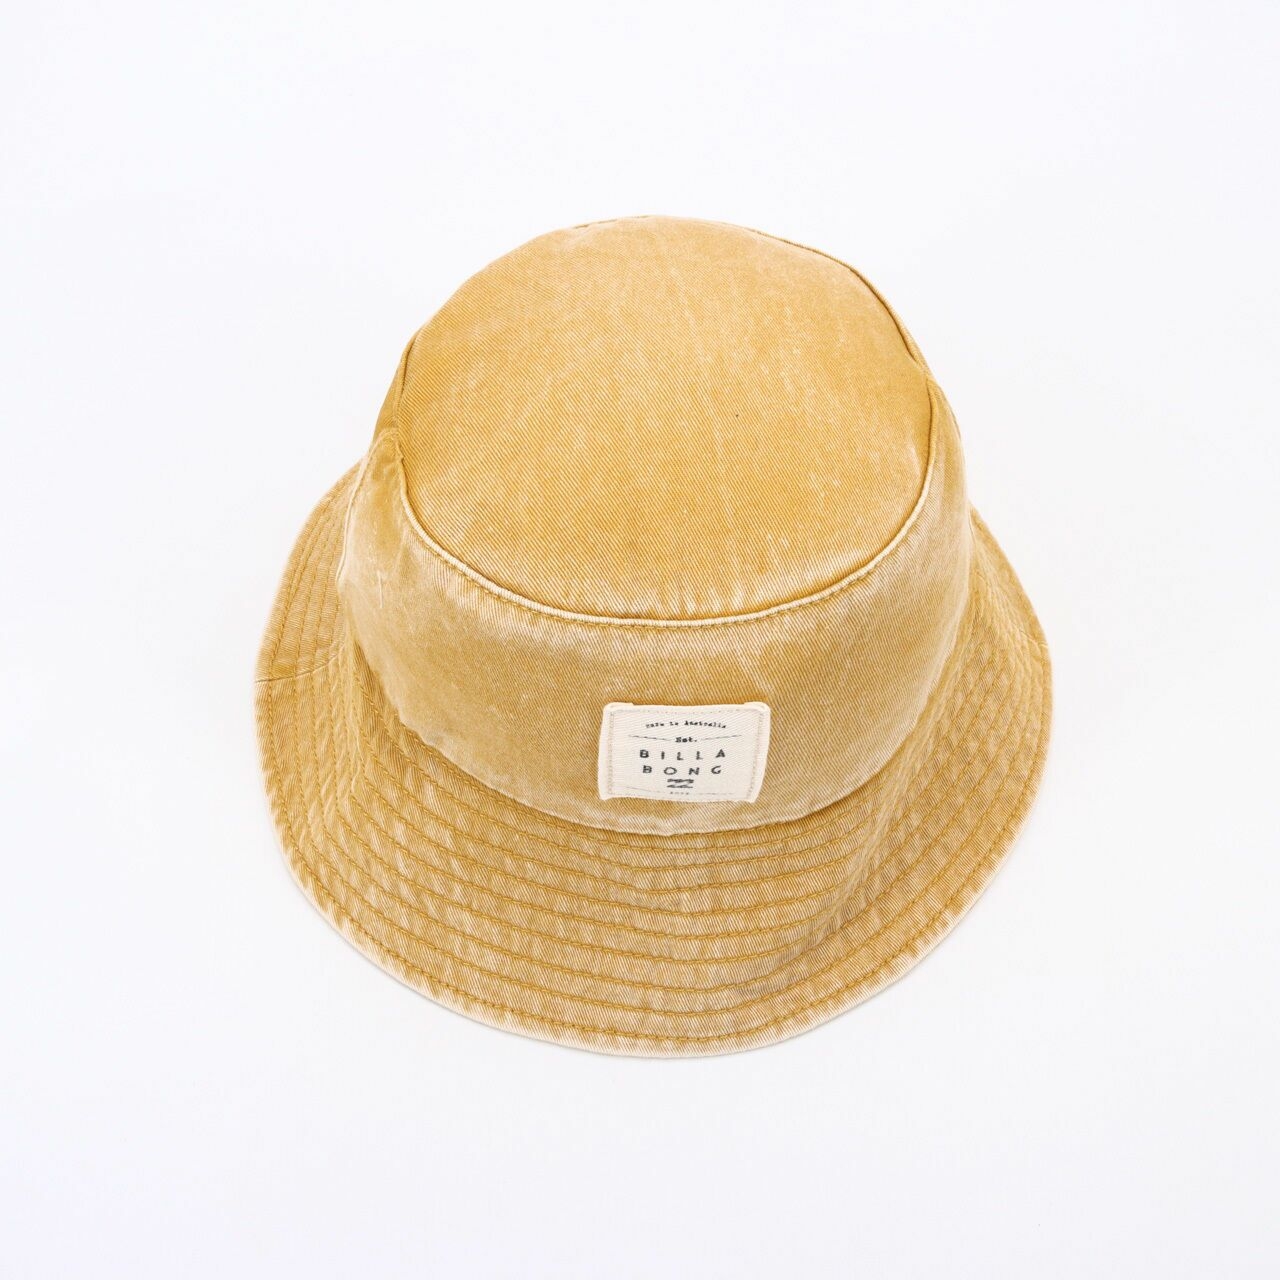 Billabong Sun Faded Bucket Hat